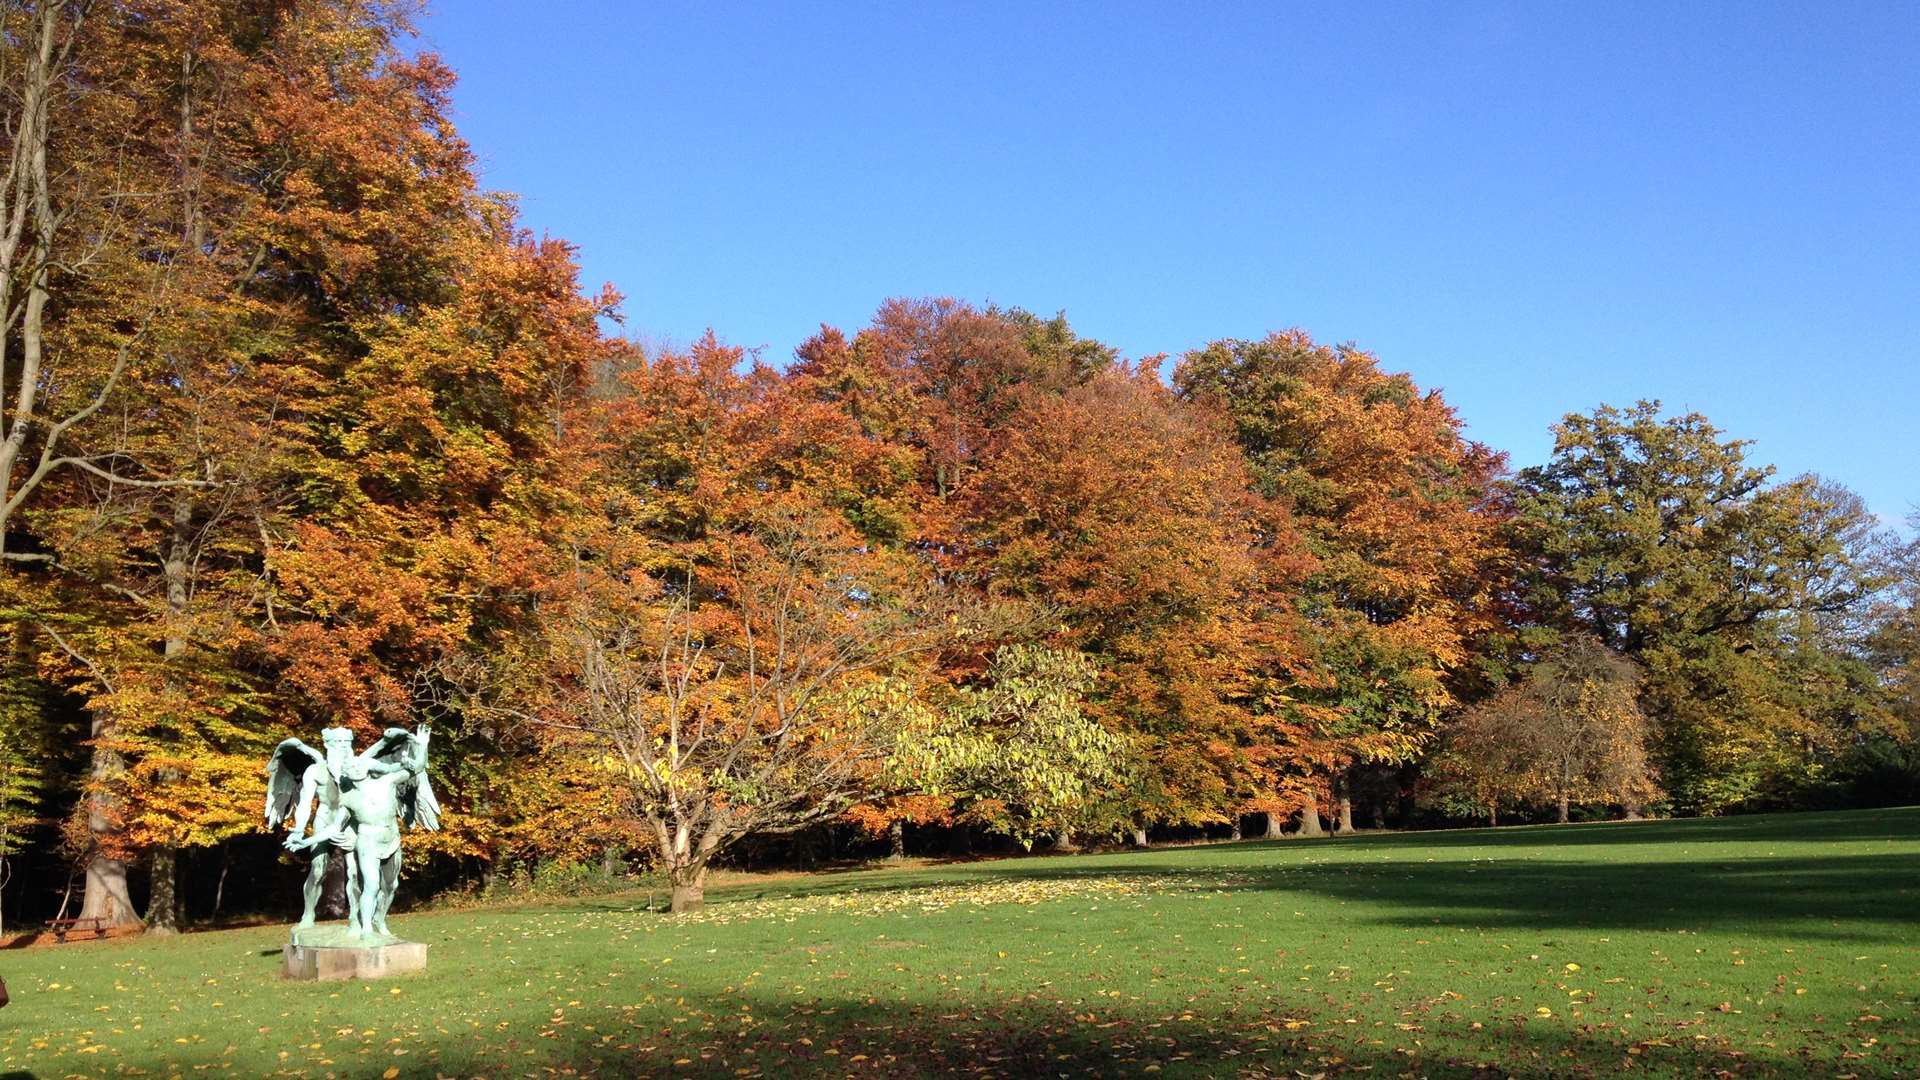 Autumn colour in the Meise Botanic Garden parkland